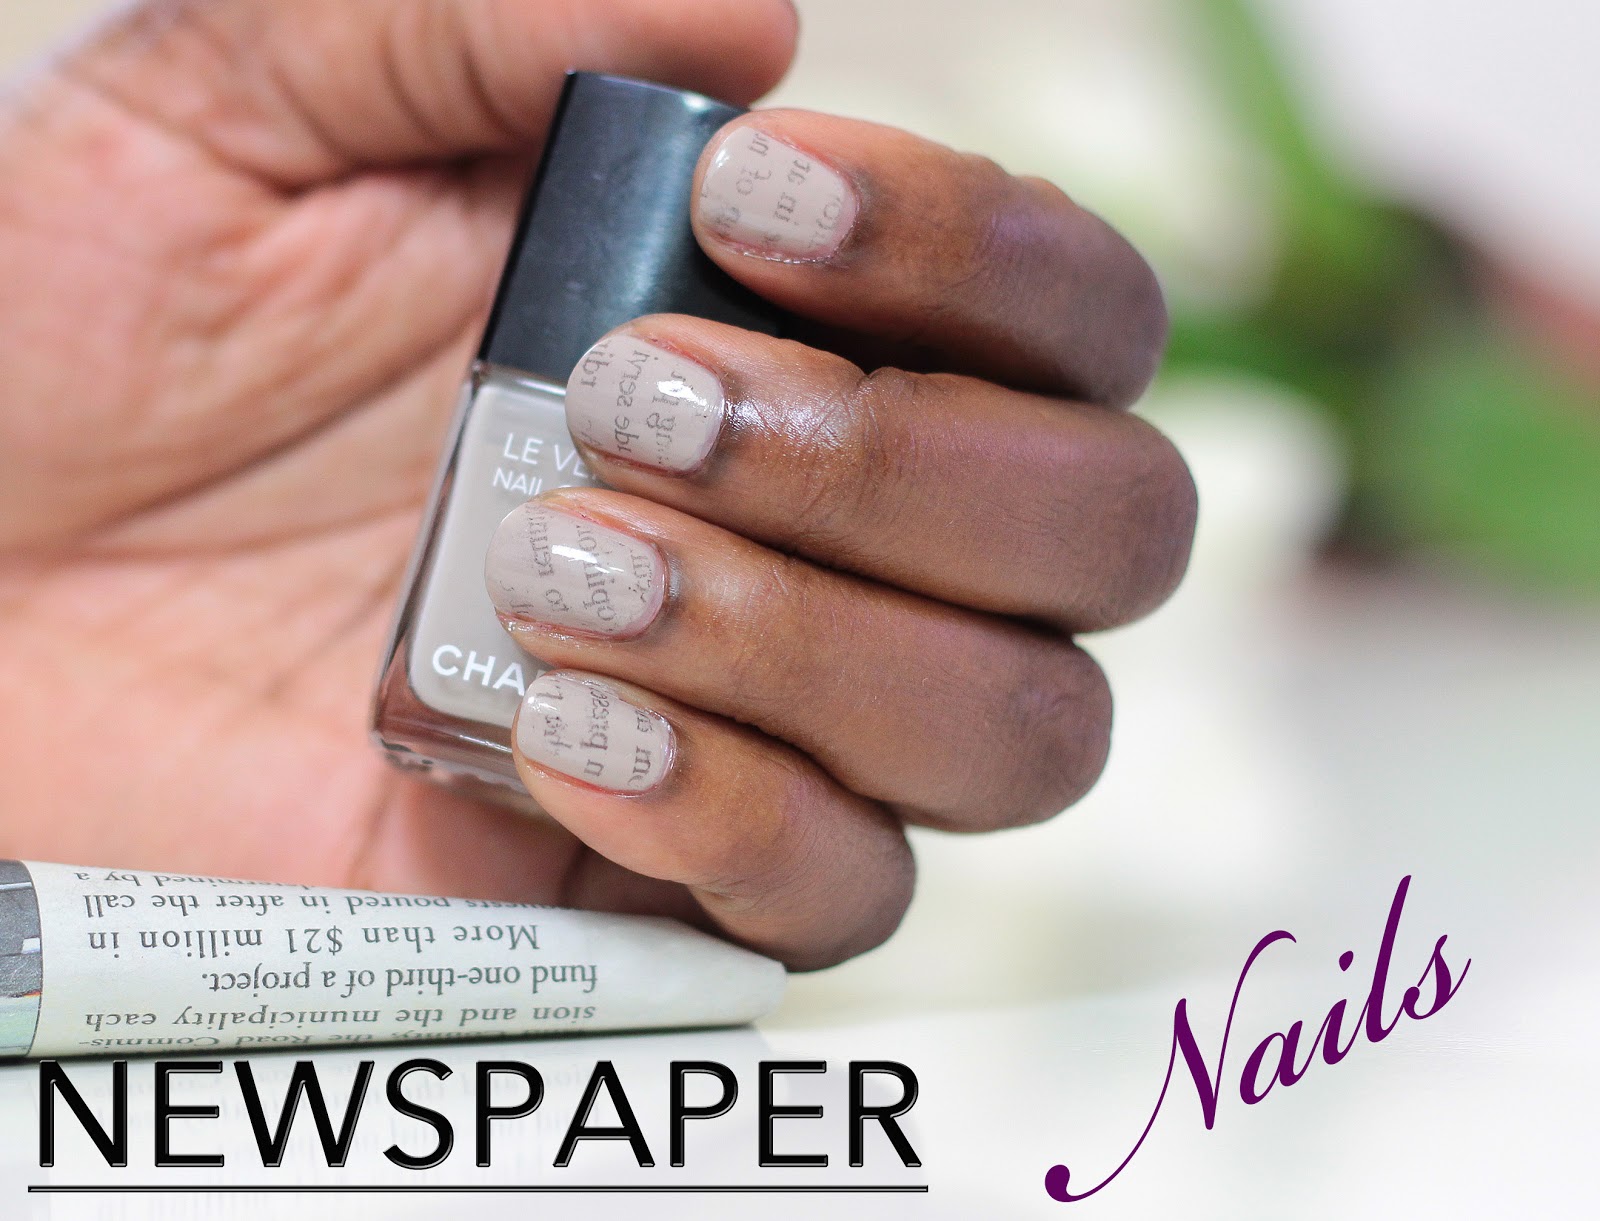 How To Make Newspaper Nails Darker